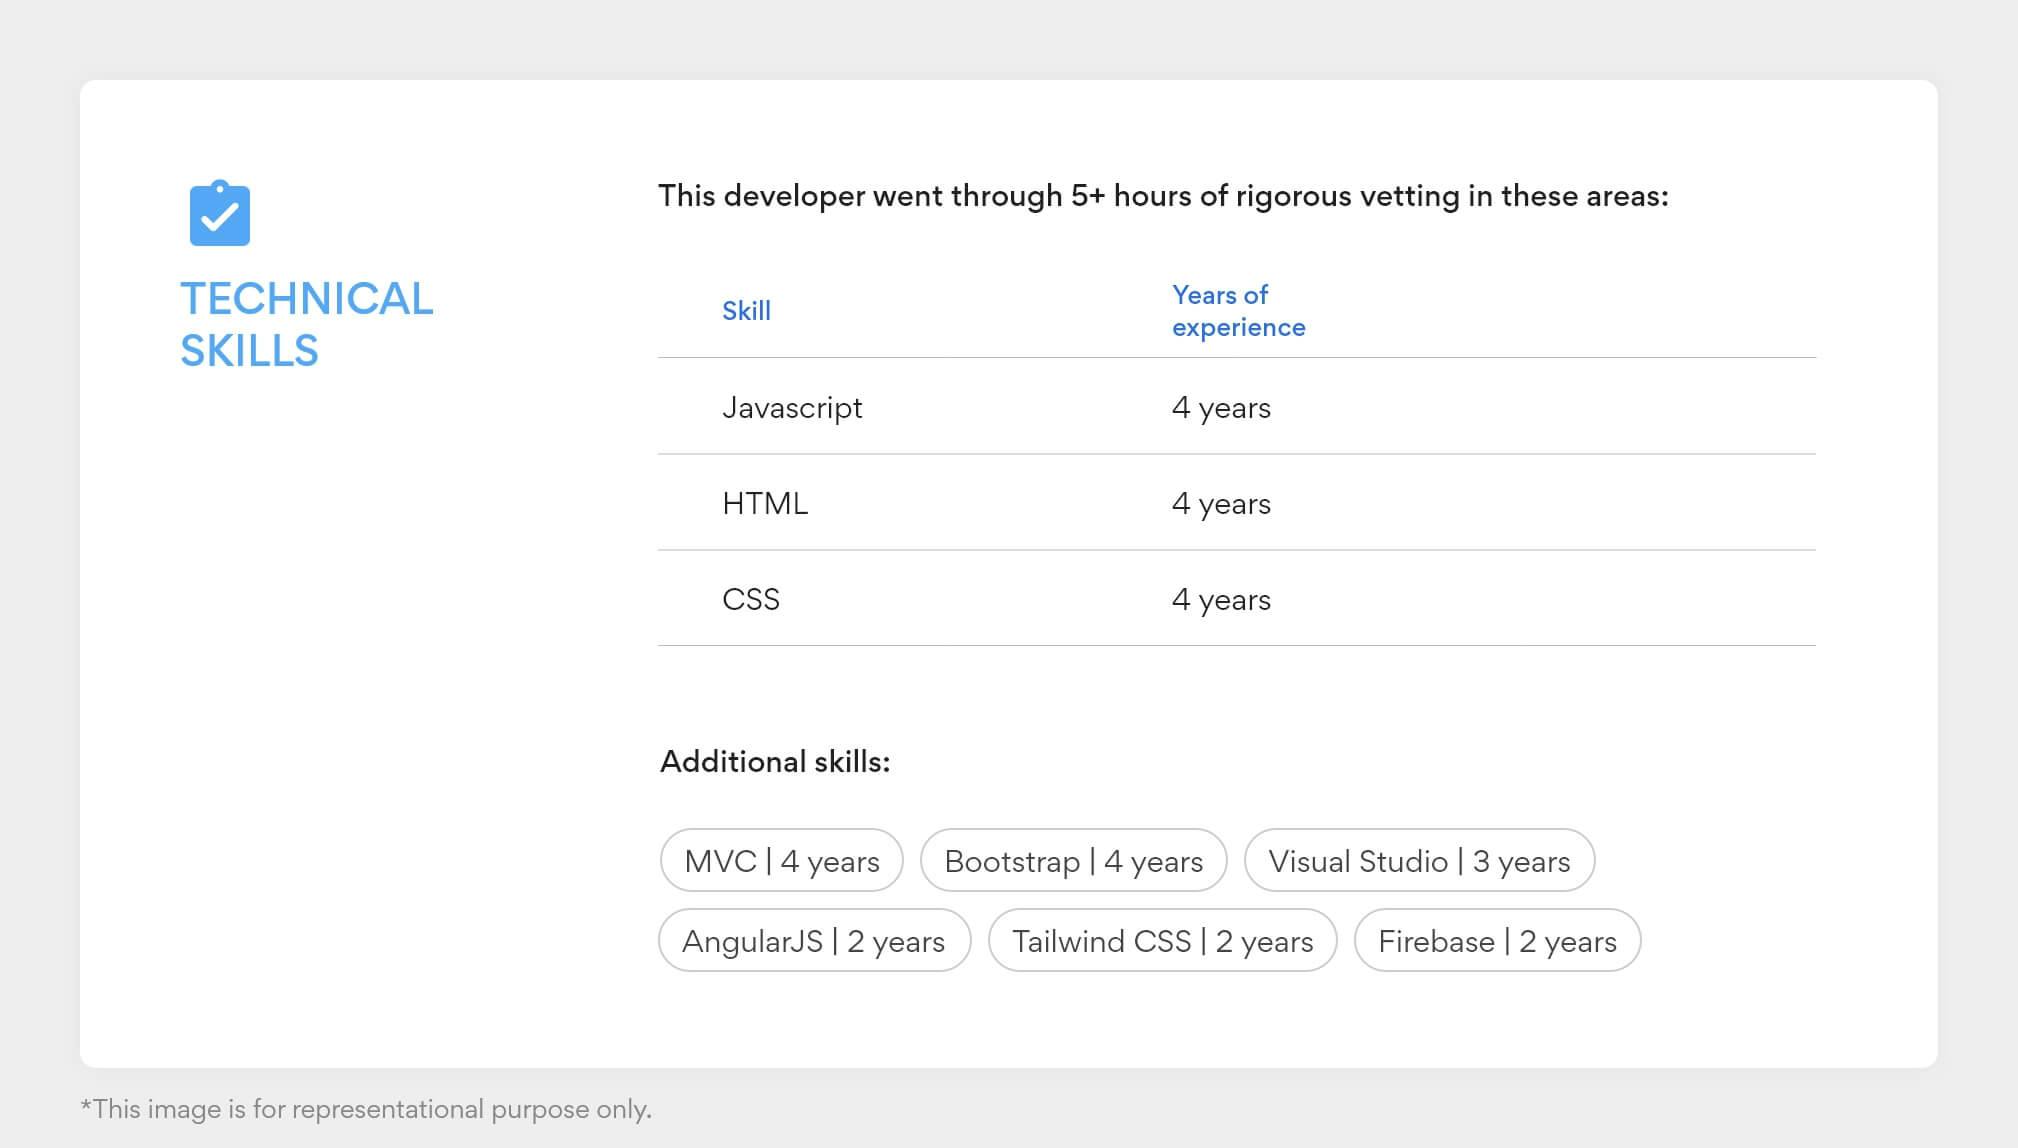 Feature your main MongoDB jobs skills